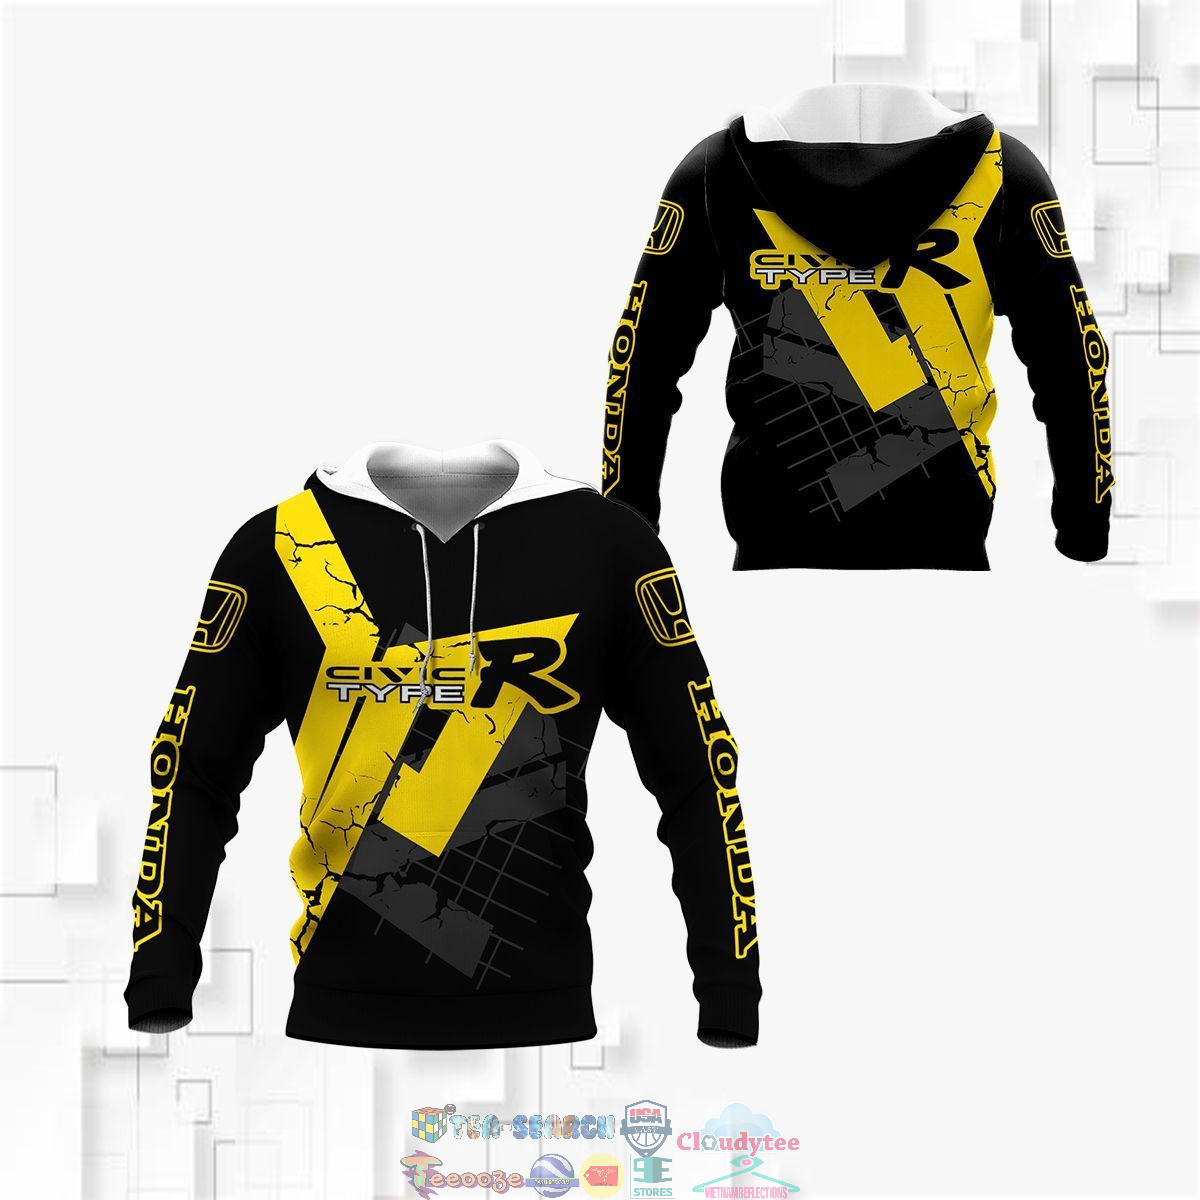 Sc07oTuw-TH130822-34xxxHonda-Civic-Type-R-ver-12-3D-hoodie-and-t-shirt3.jpg